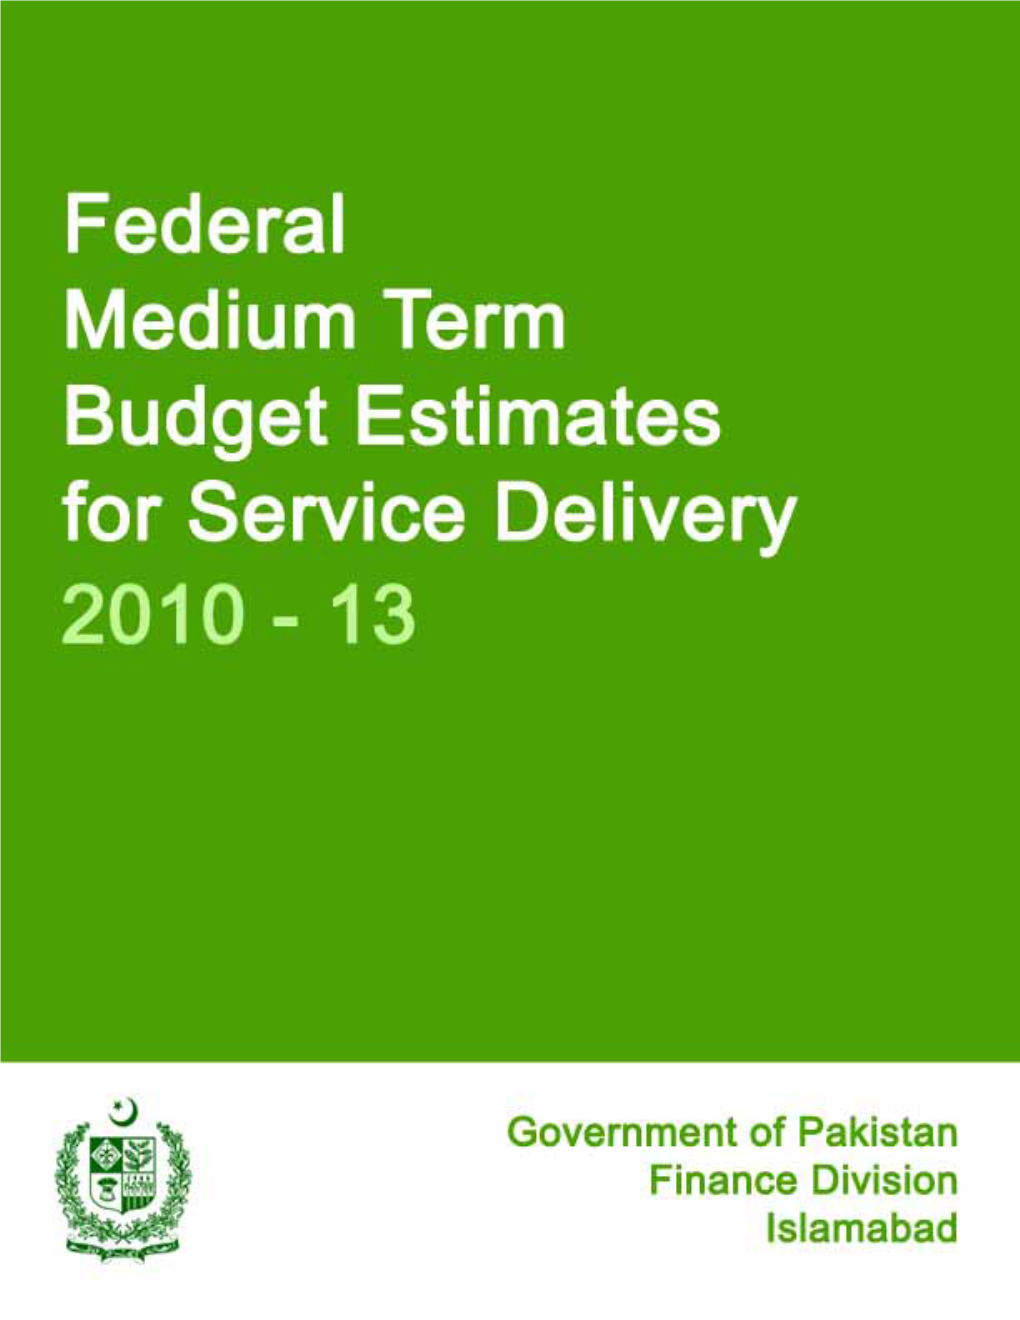 Federal Medium Term Budget Estimates for Service Delivery 2010-13